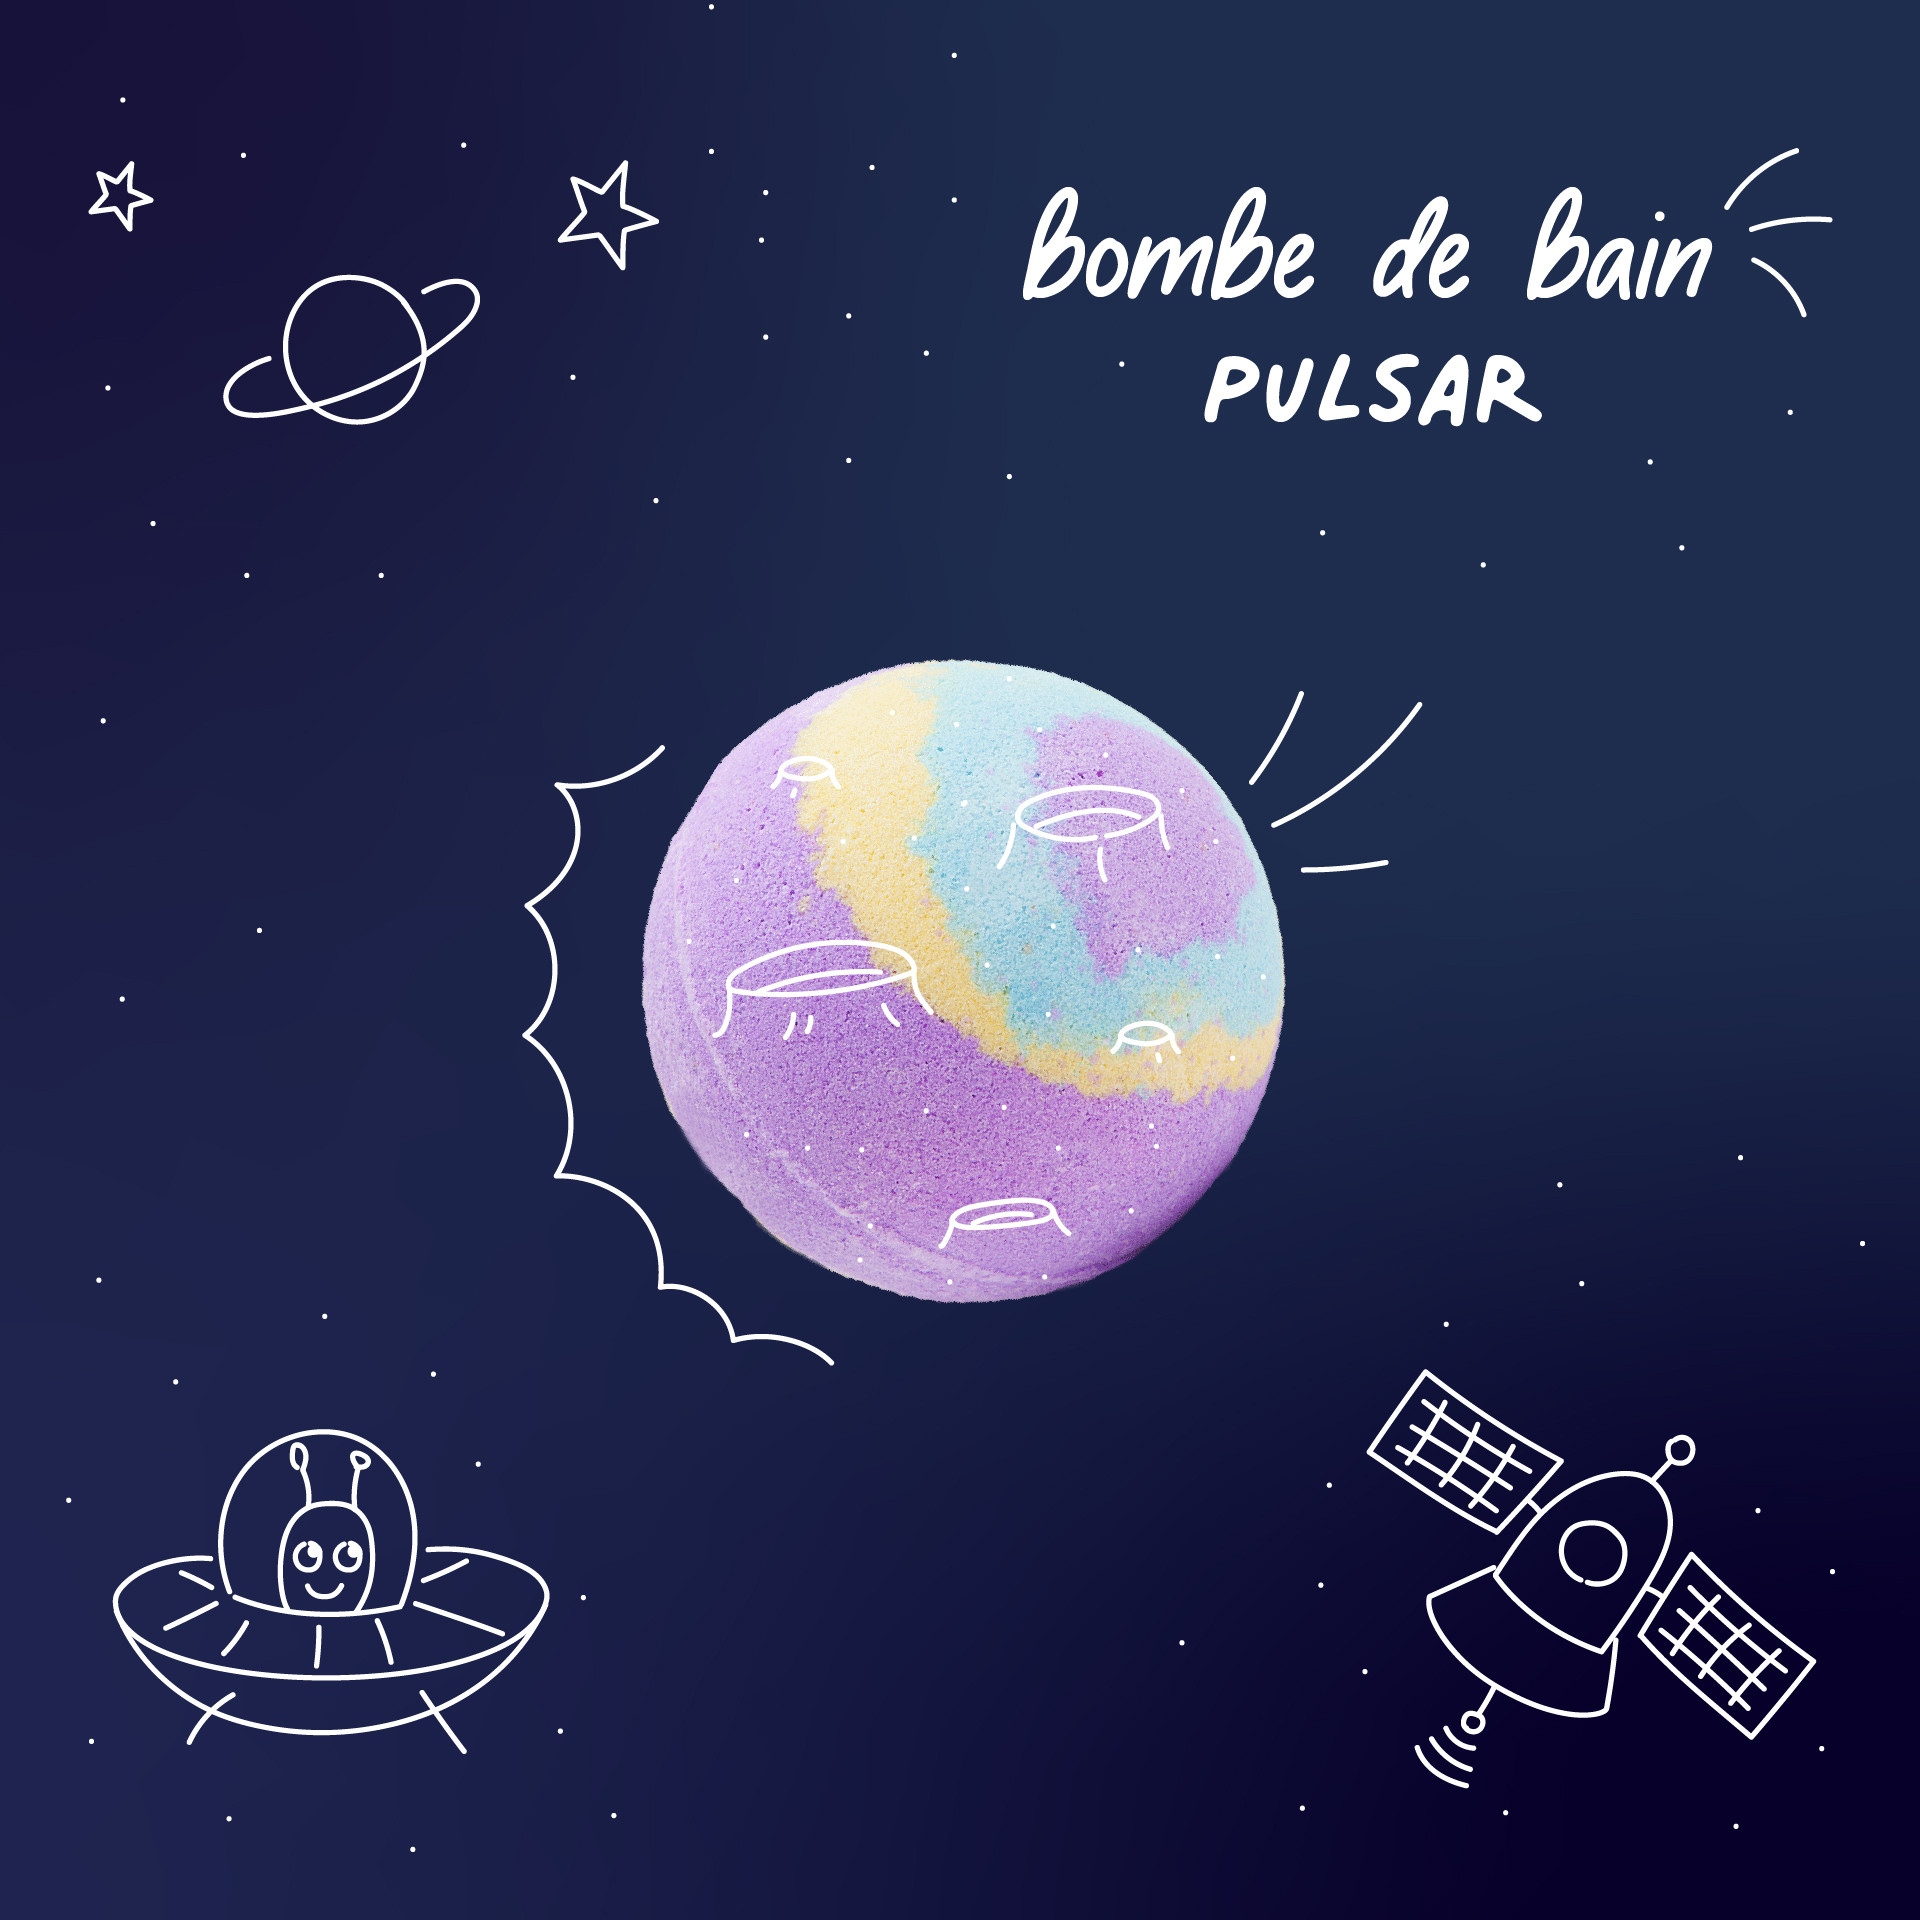 Bath bomb - Pulsar